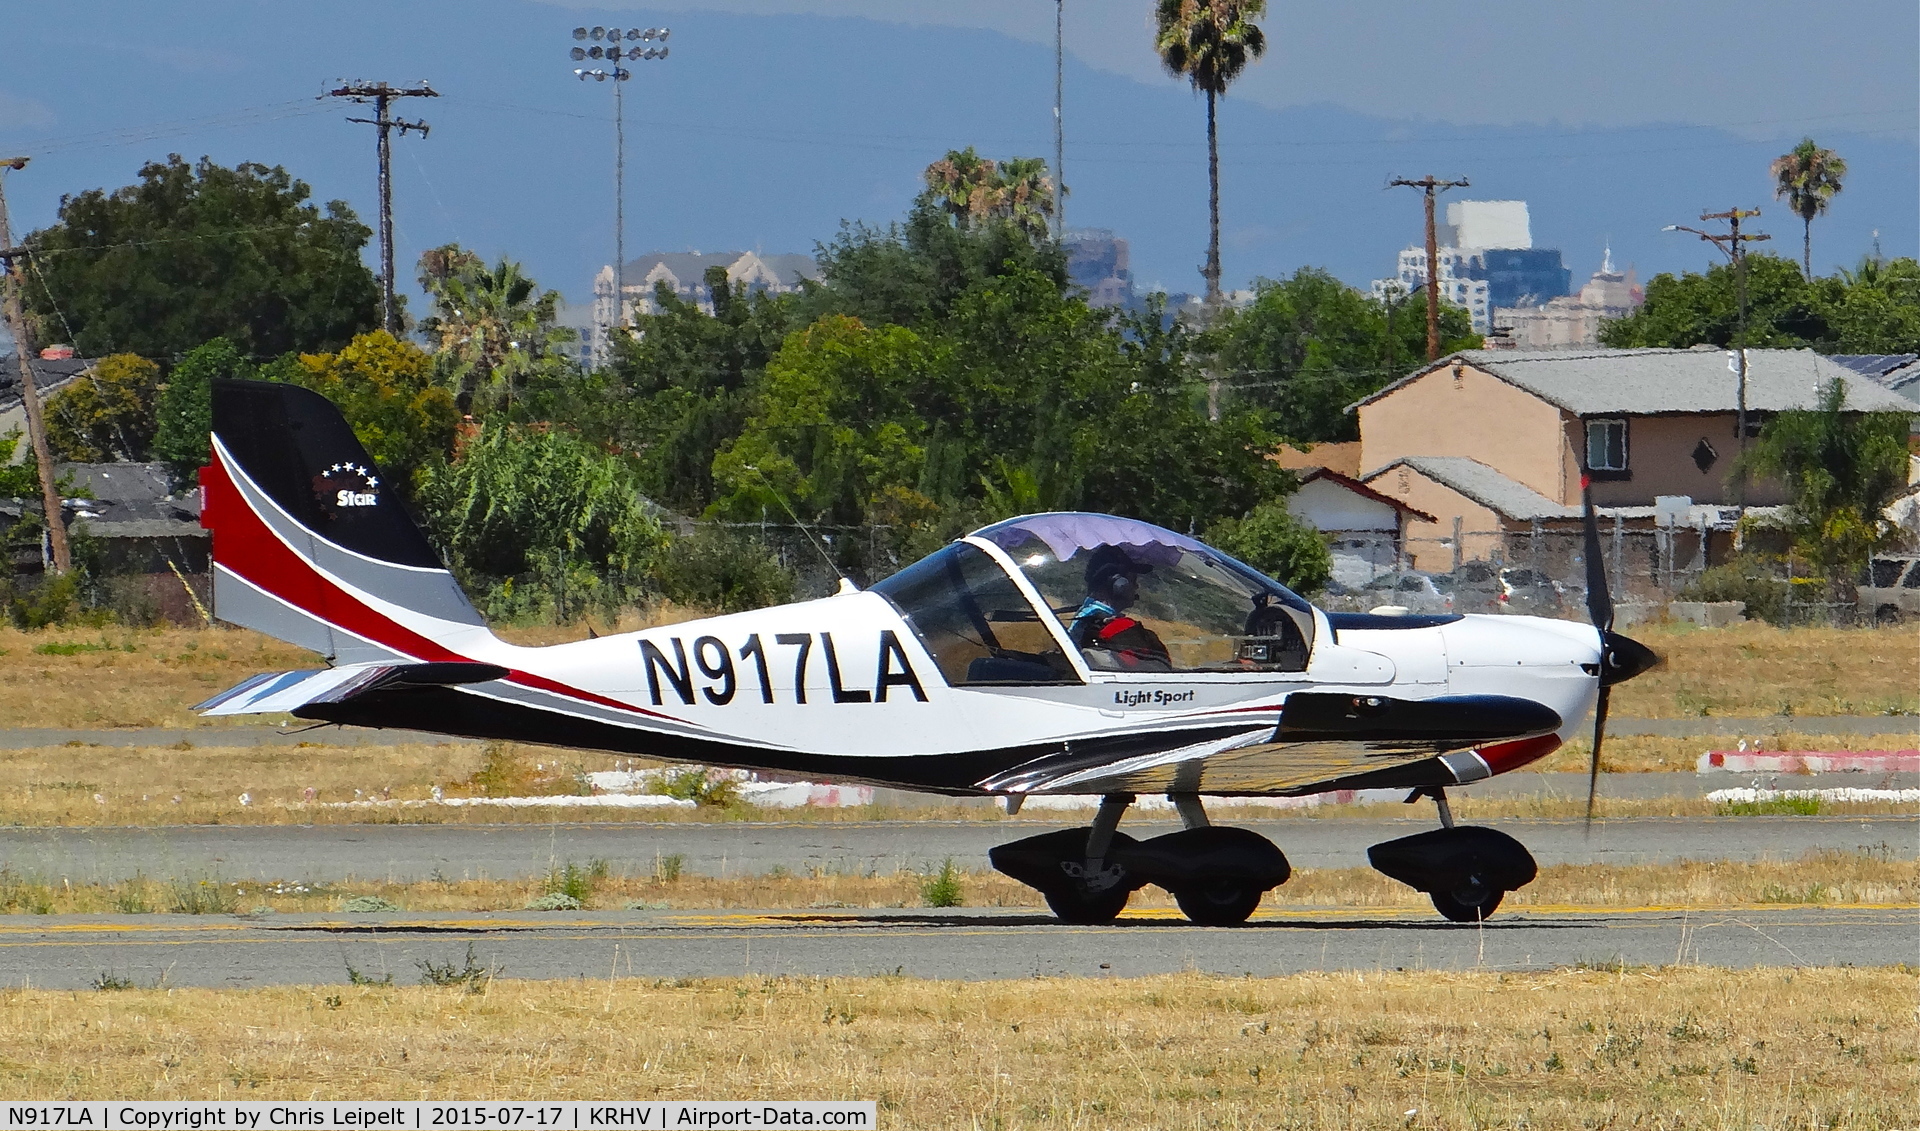 N917LA, 2007 Evektor-Aerotechnik Sportstar Plus C/N 20070917, California-based 2007 Sportstar Plus landing runway 31R at Reid Hillview Airport, San Jose, CA.